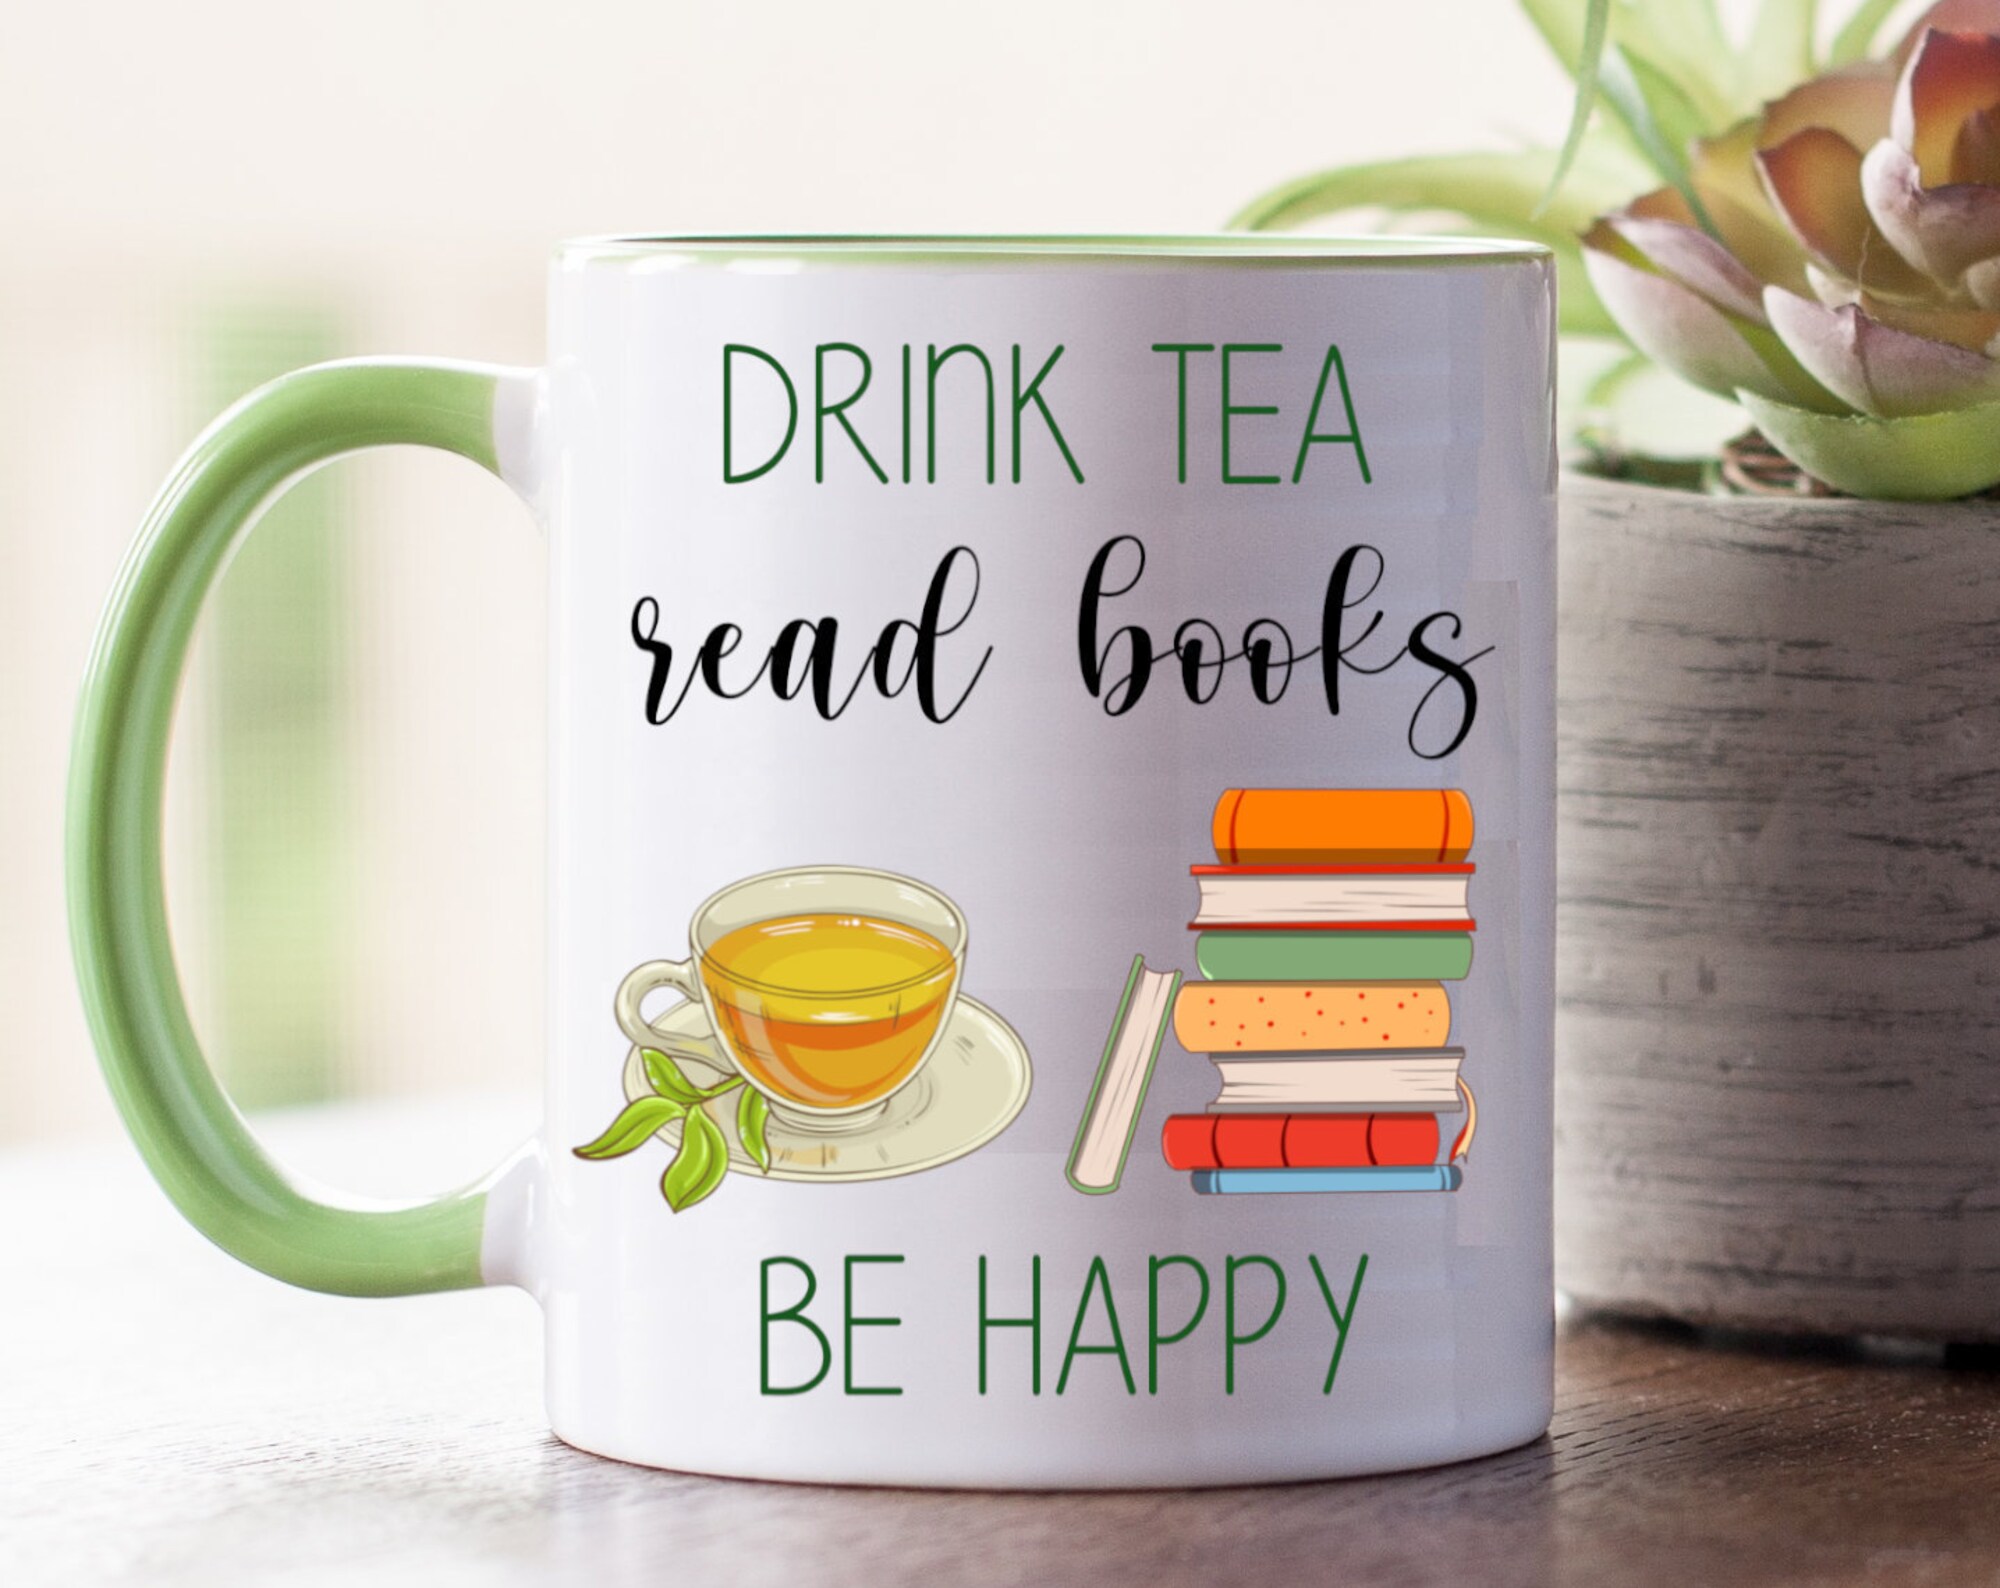 Drink Tea Read Books Be Happy Mug